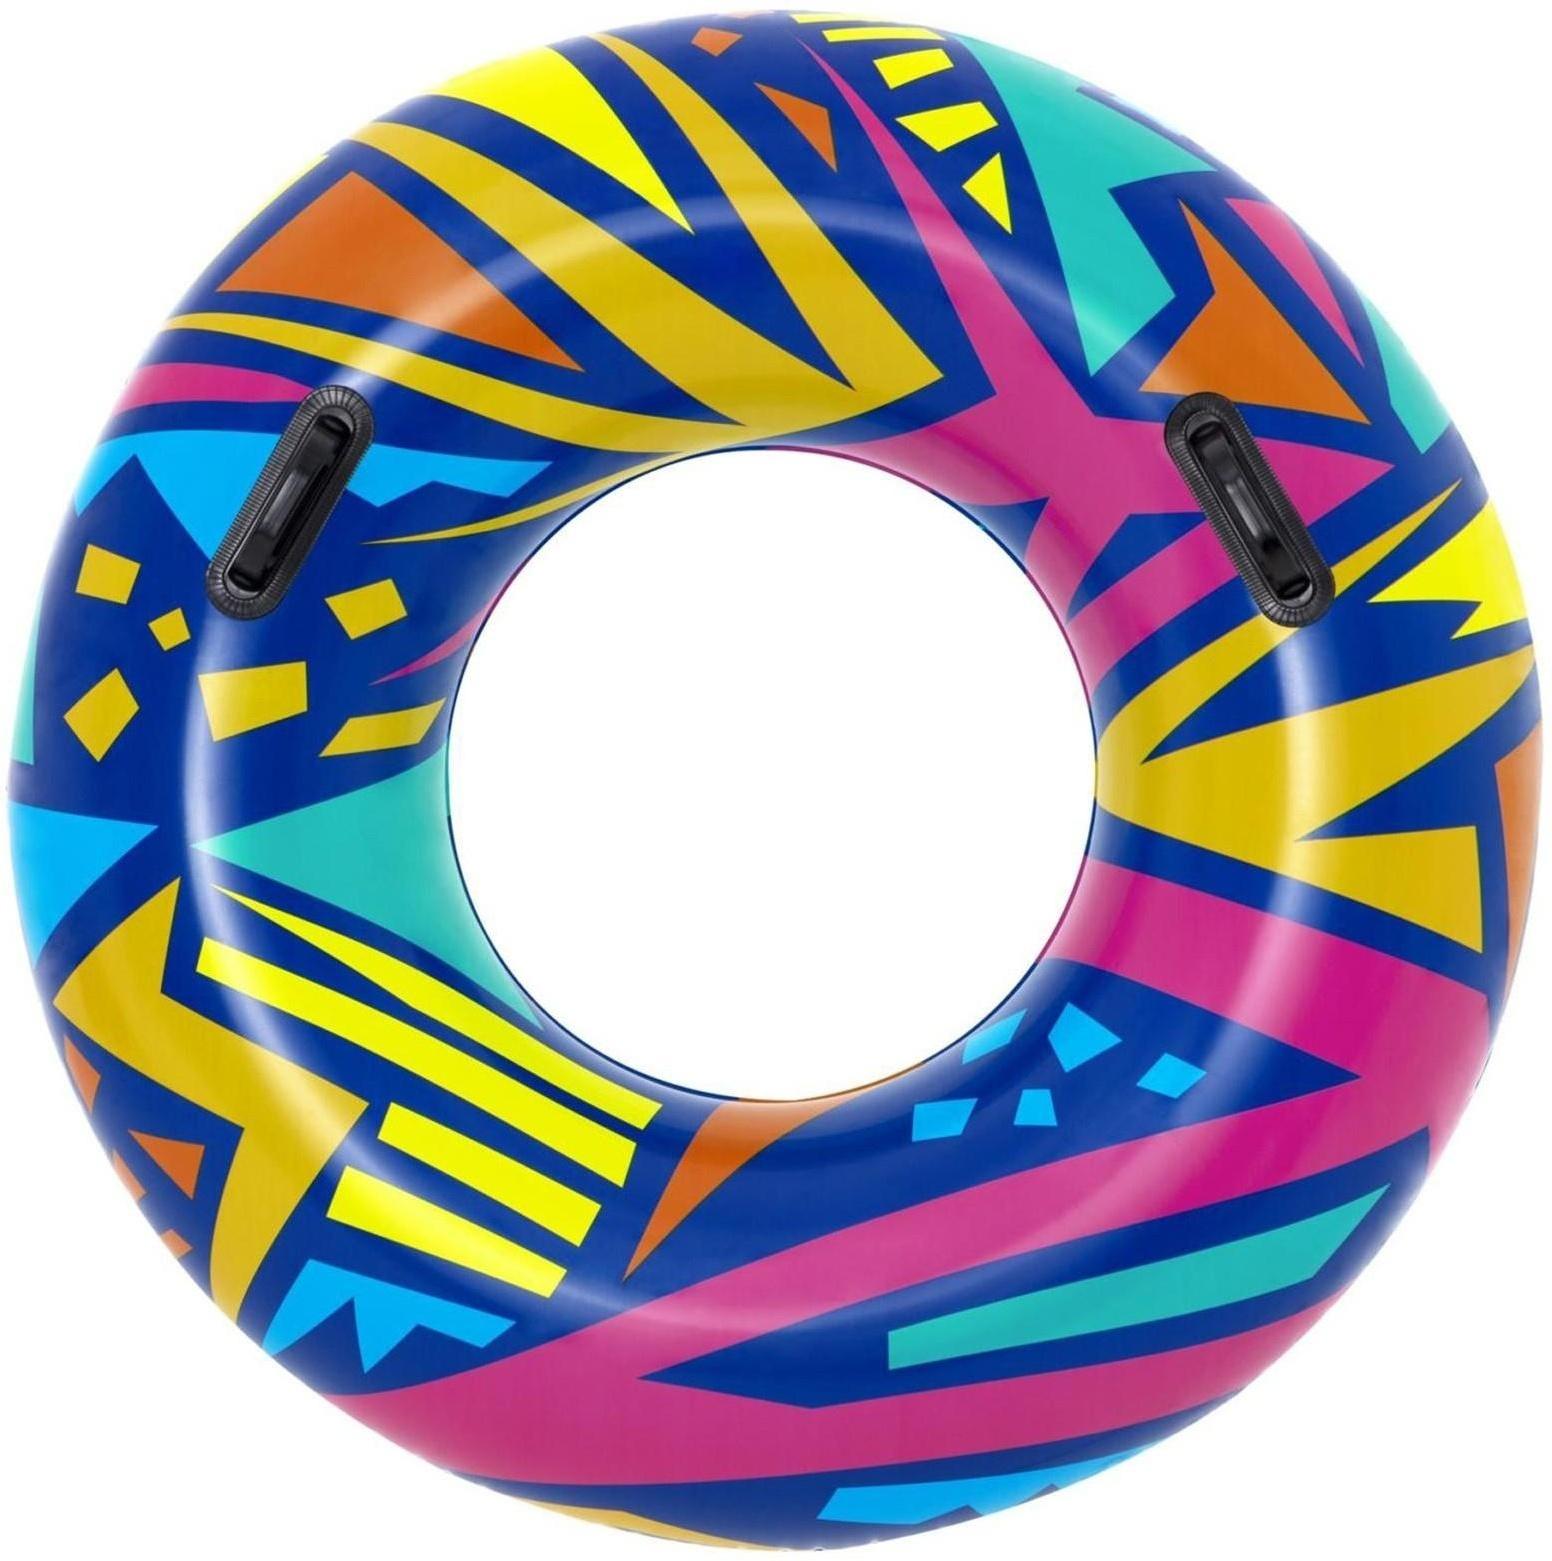 Круг для плавания «Геометрия», 107 см, цвета микс 36228 Bestway